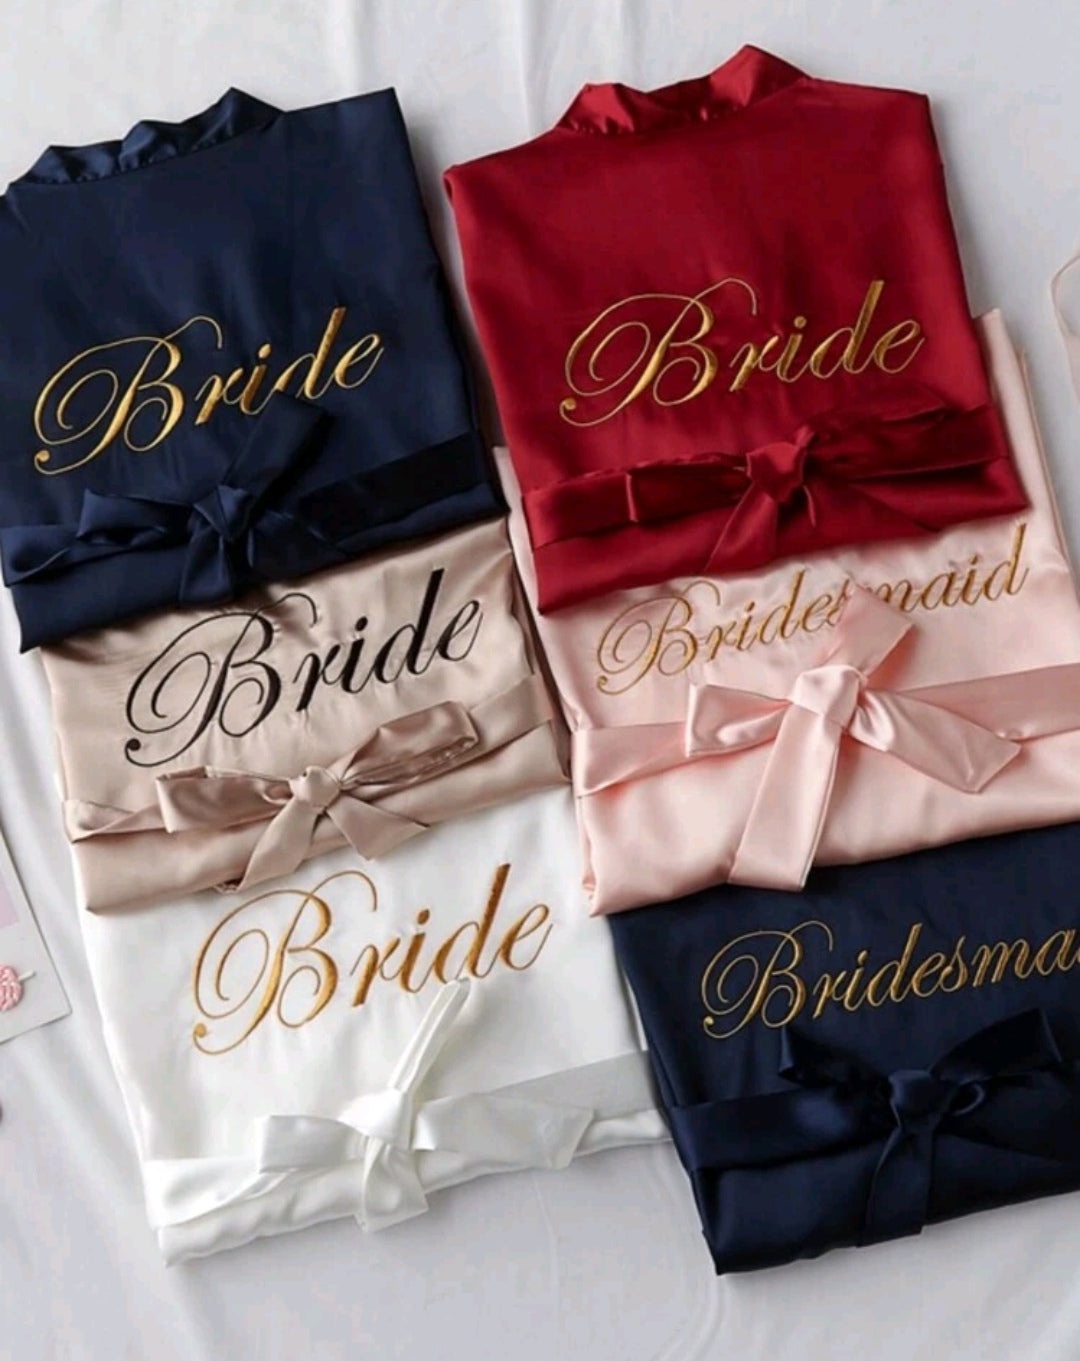 Bridesmaids Robe Navy